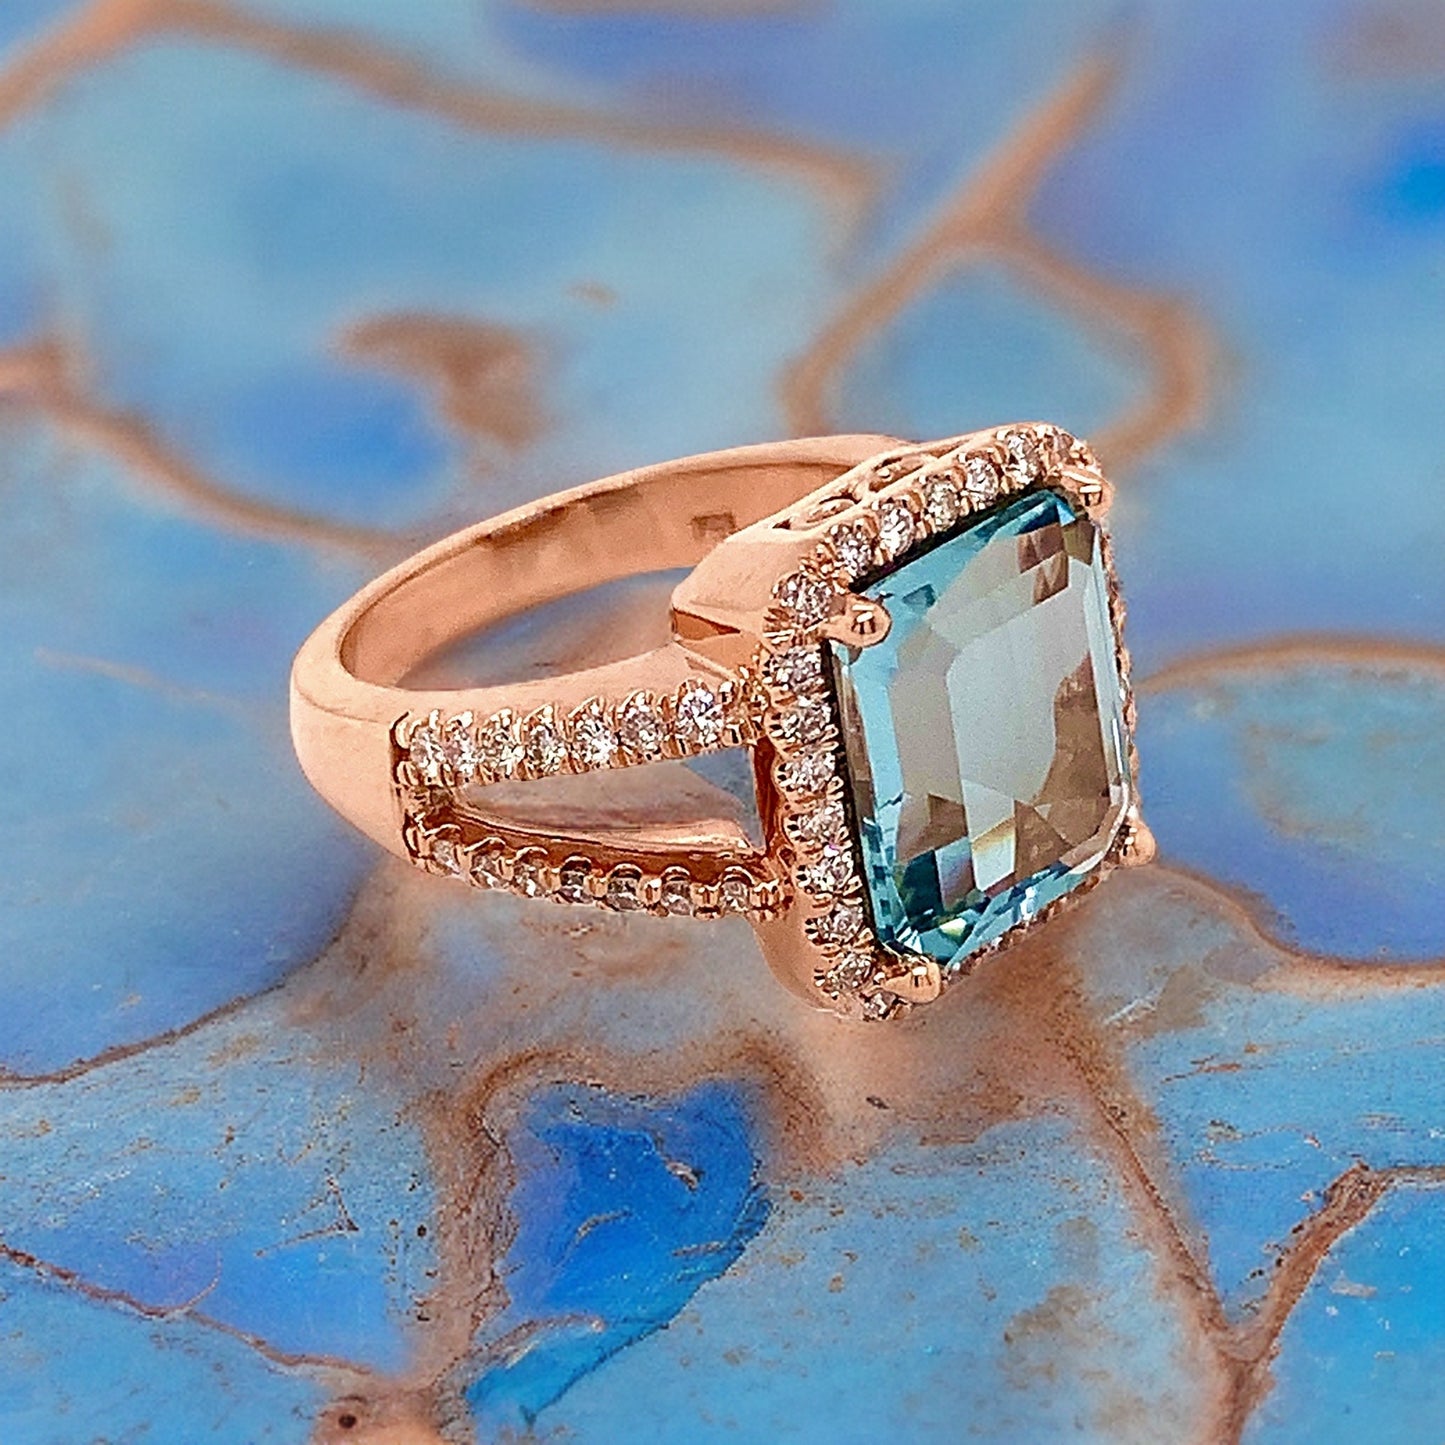 Diamond Aquamarine Ring Size 6.5 14k Gold 6.25 TCW Certified $6,950 120672